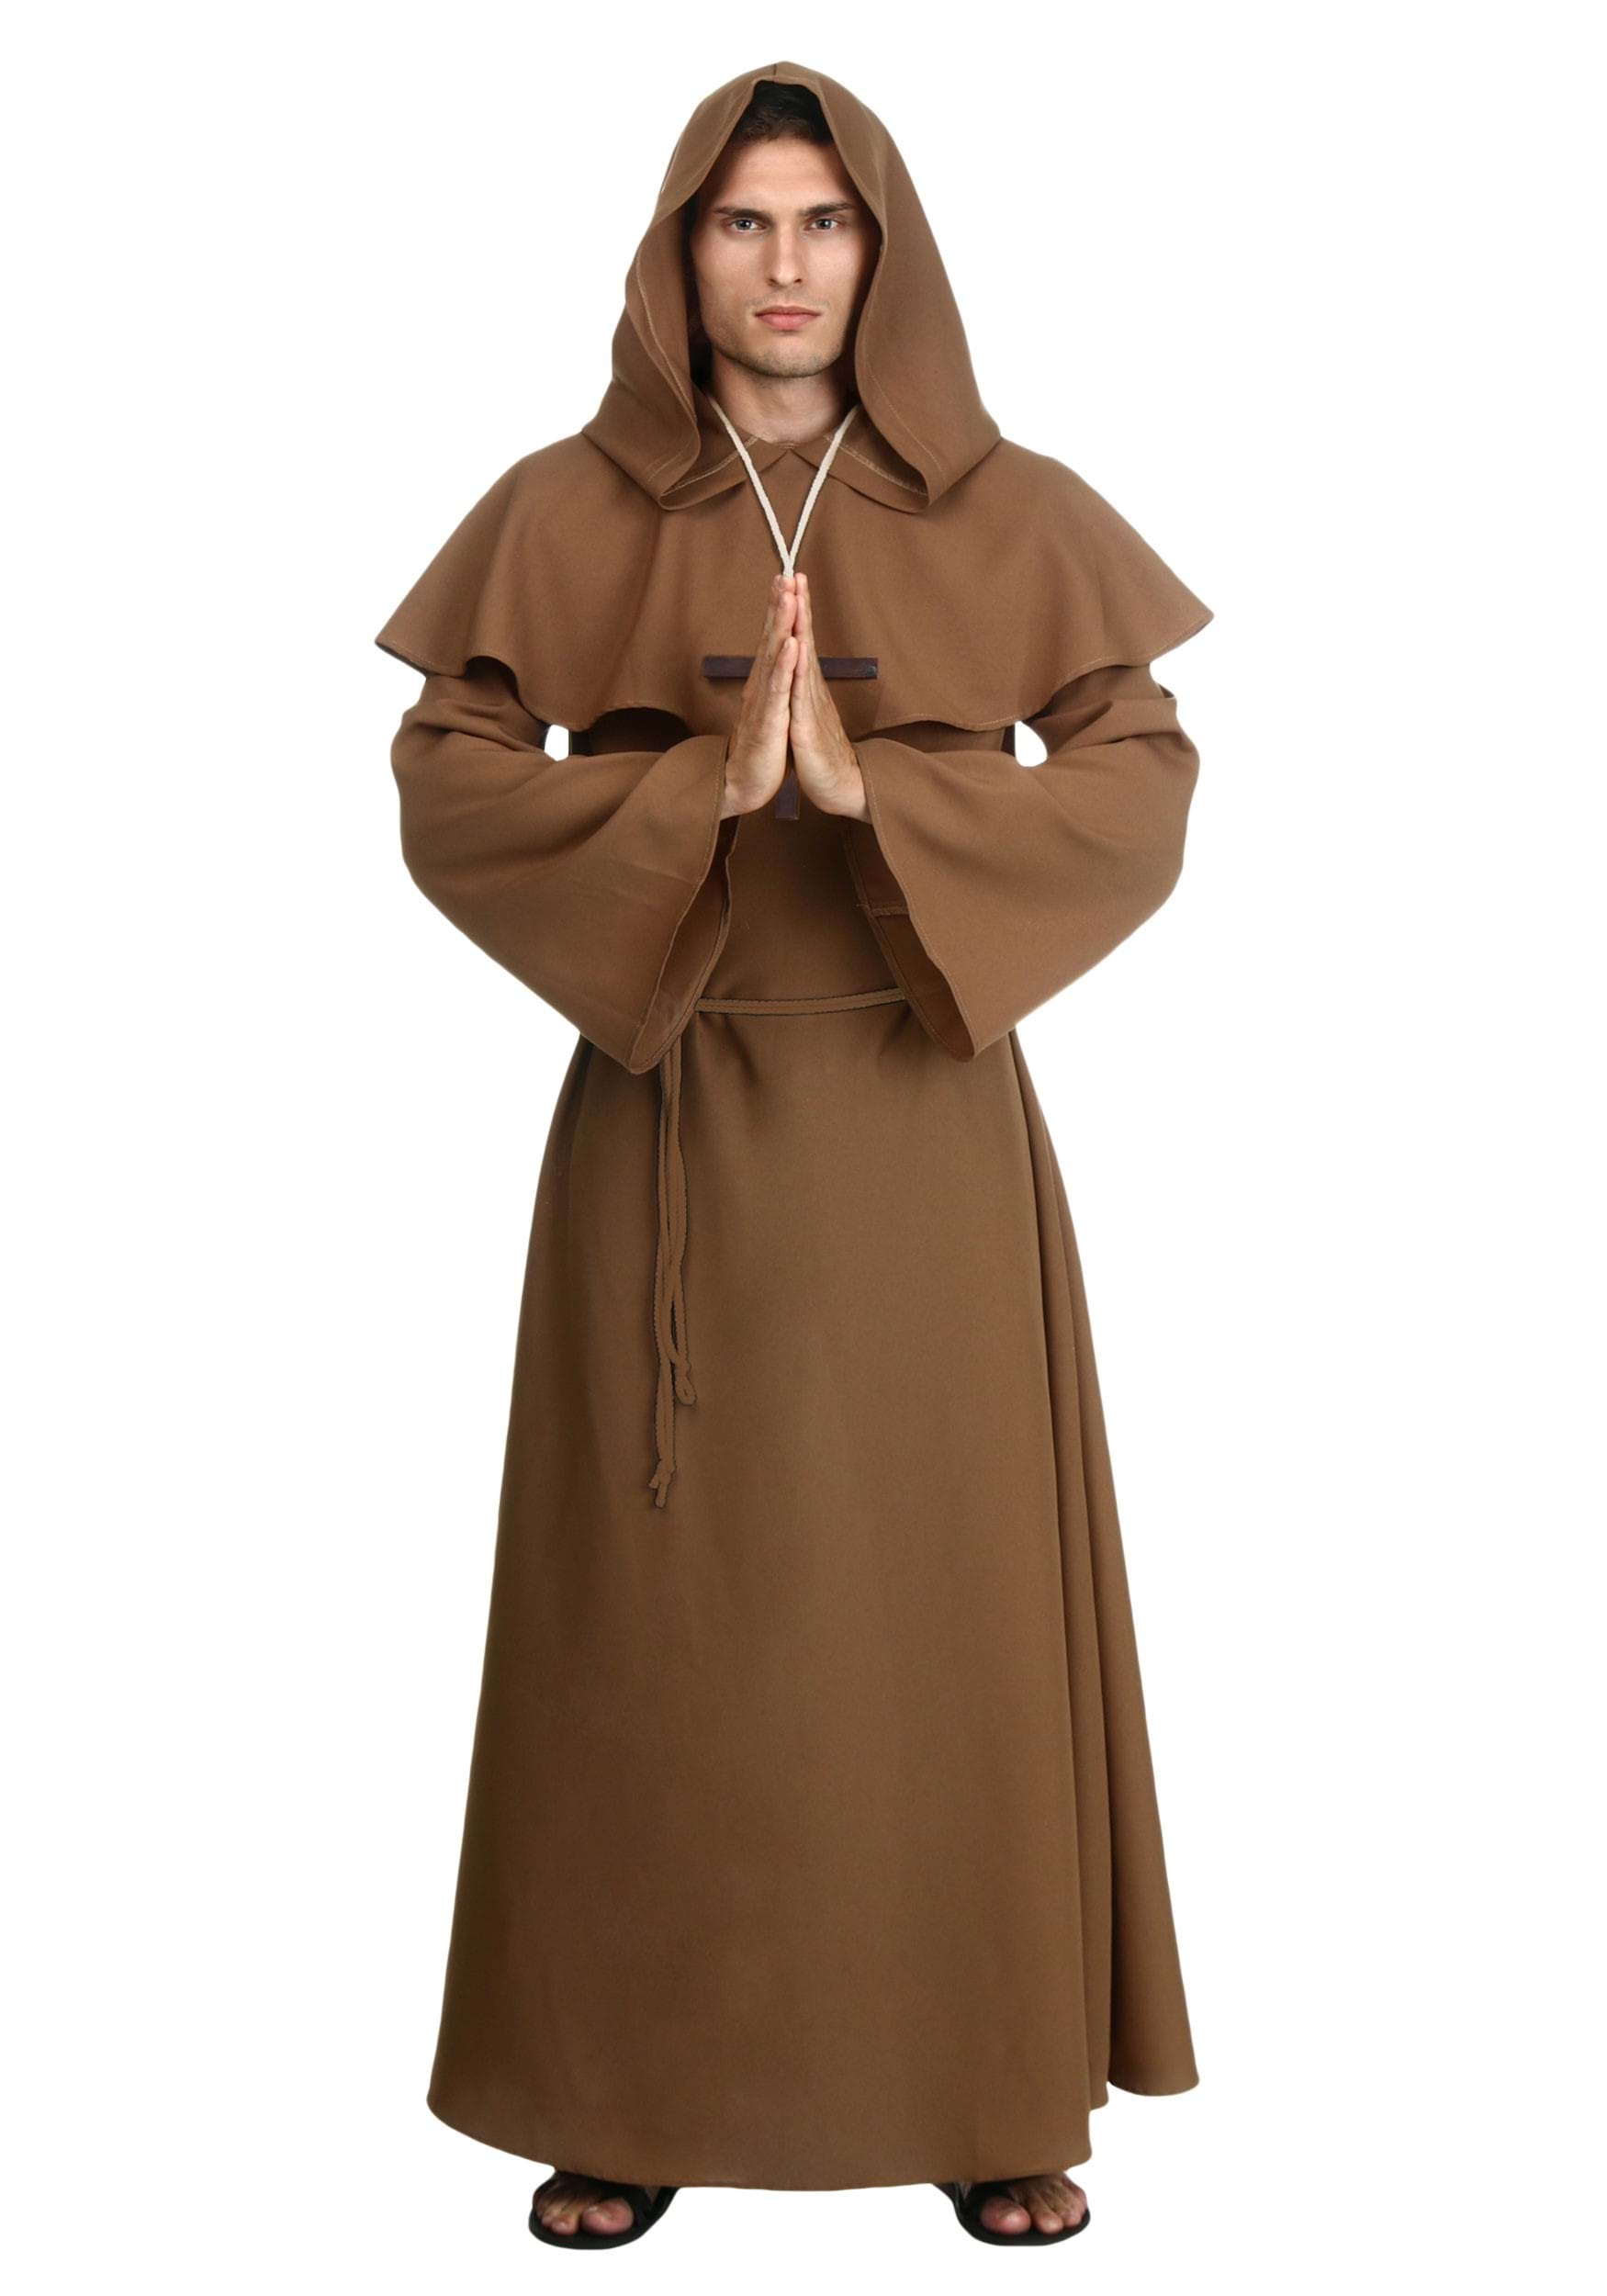 Plus Size Men's Brown Monk Robe Fancy Dress Costume